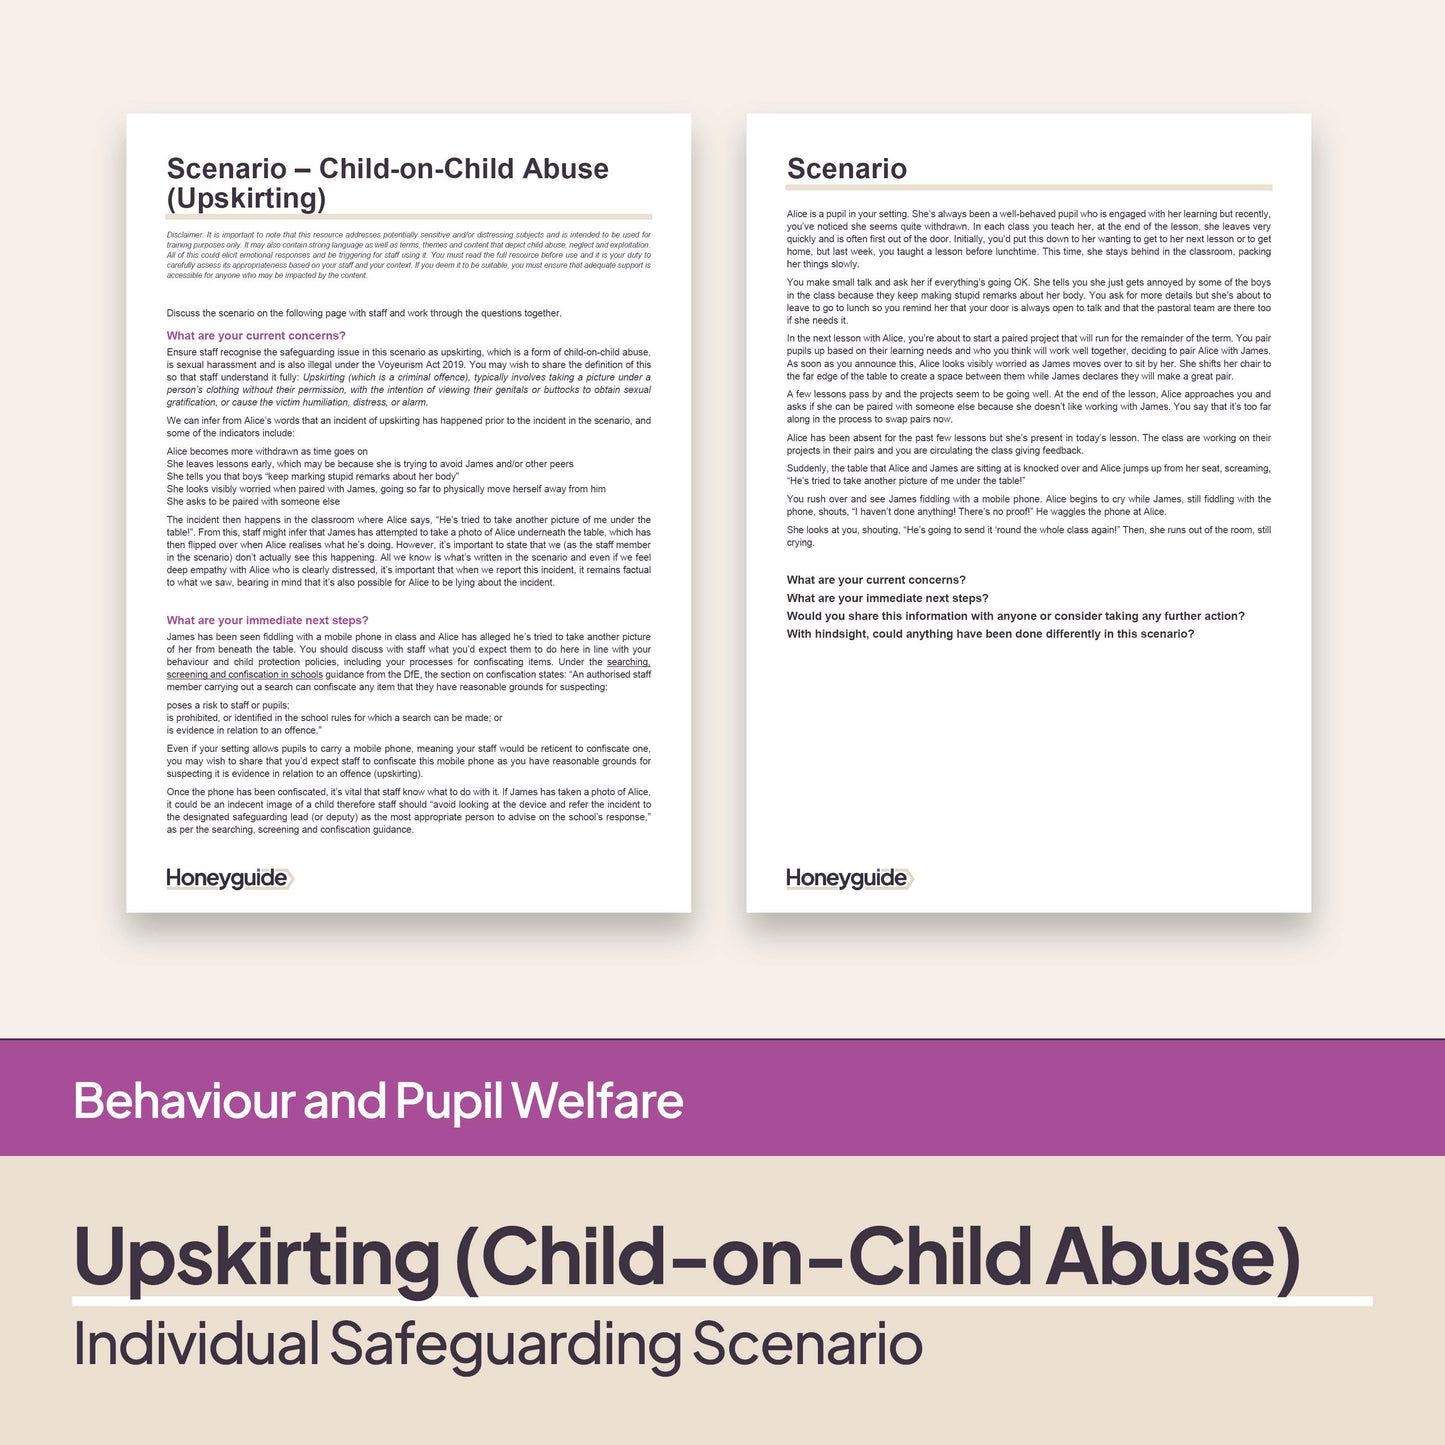 Safeguarding Scenario: Upskirting (Child-on-Child Abuse)